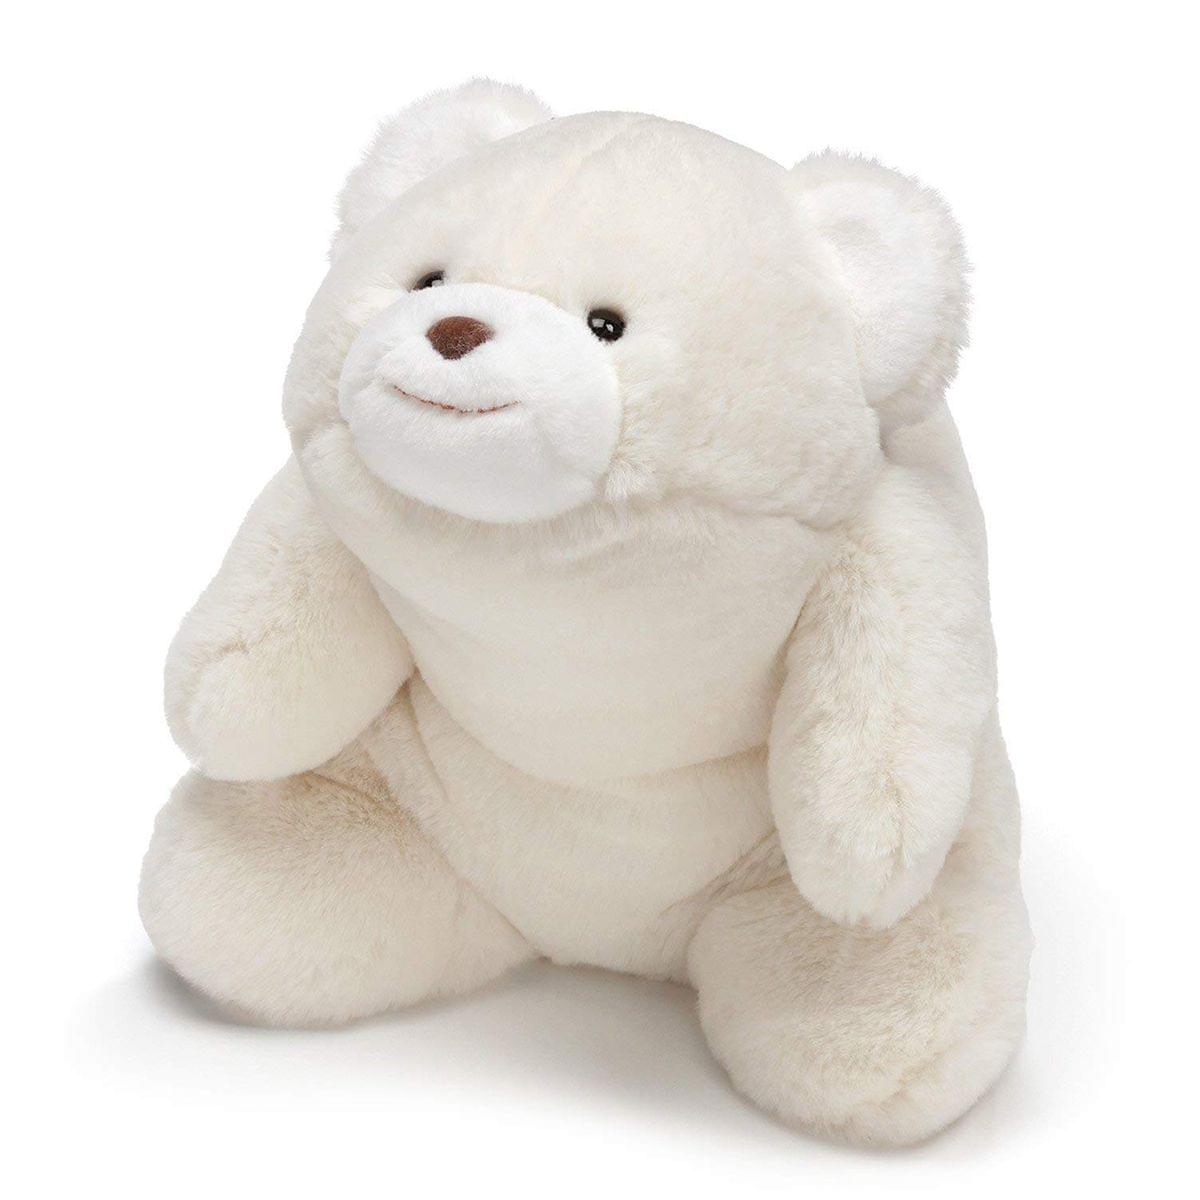 Snuffles the Teddy Bear 10-Inch Plush Toy | White